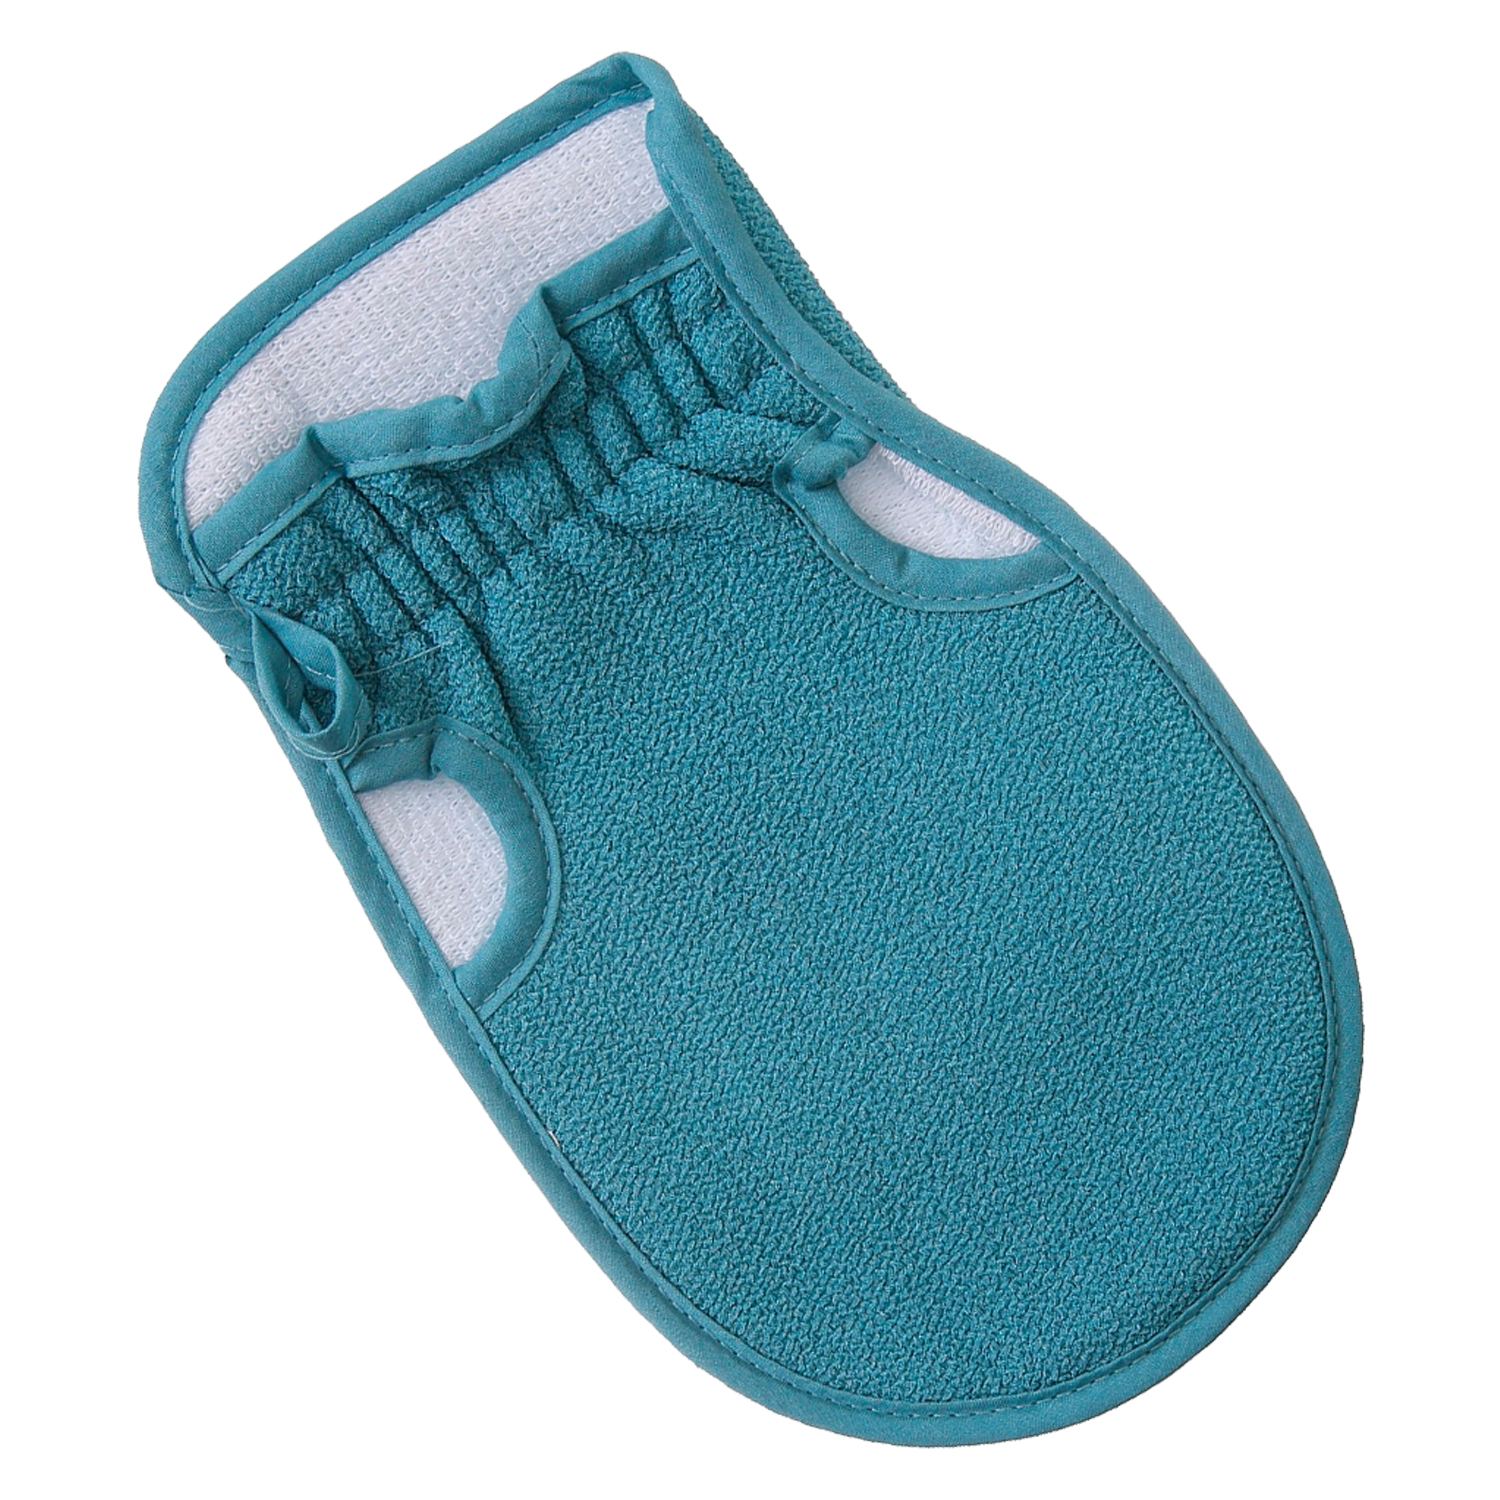 Мочалка-рукавица, VenusShape, цвет серо-голубой, 23х14 см мочалка beauty format натуральная рукавица джут